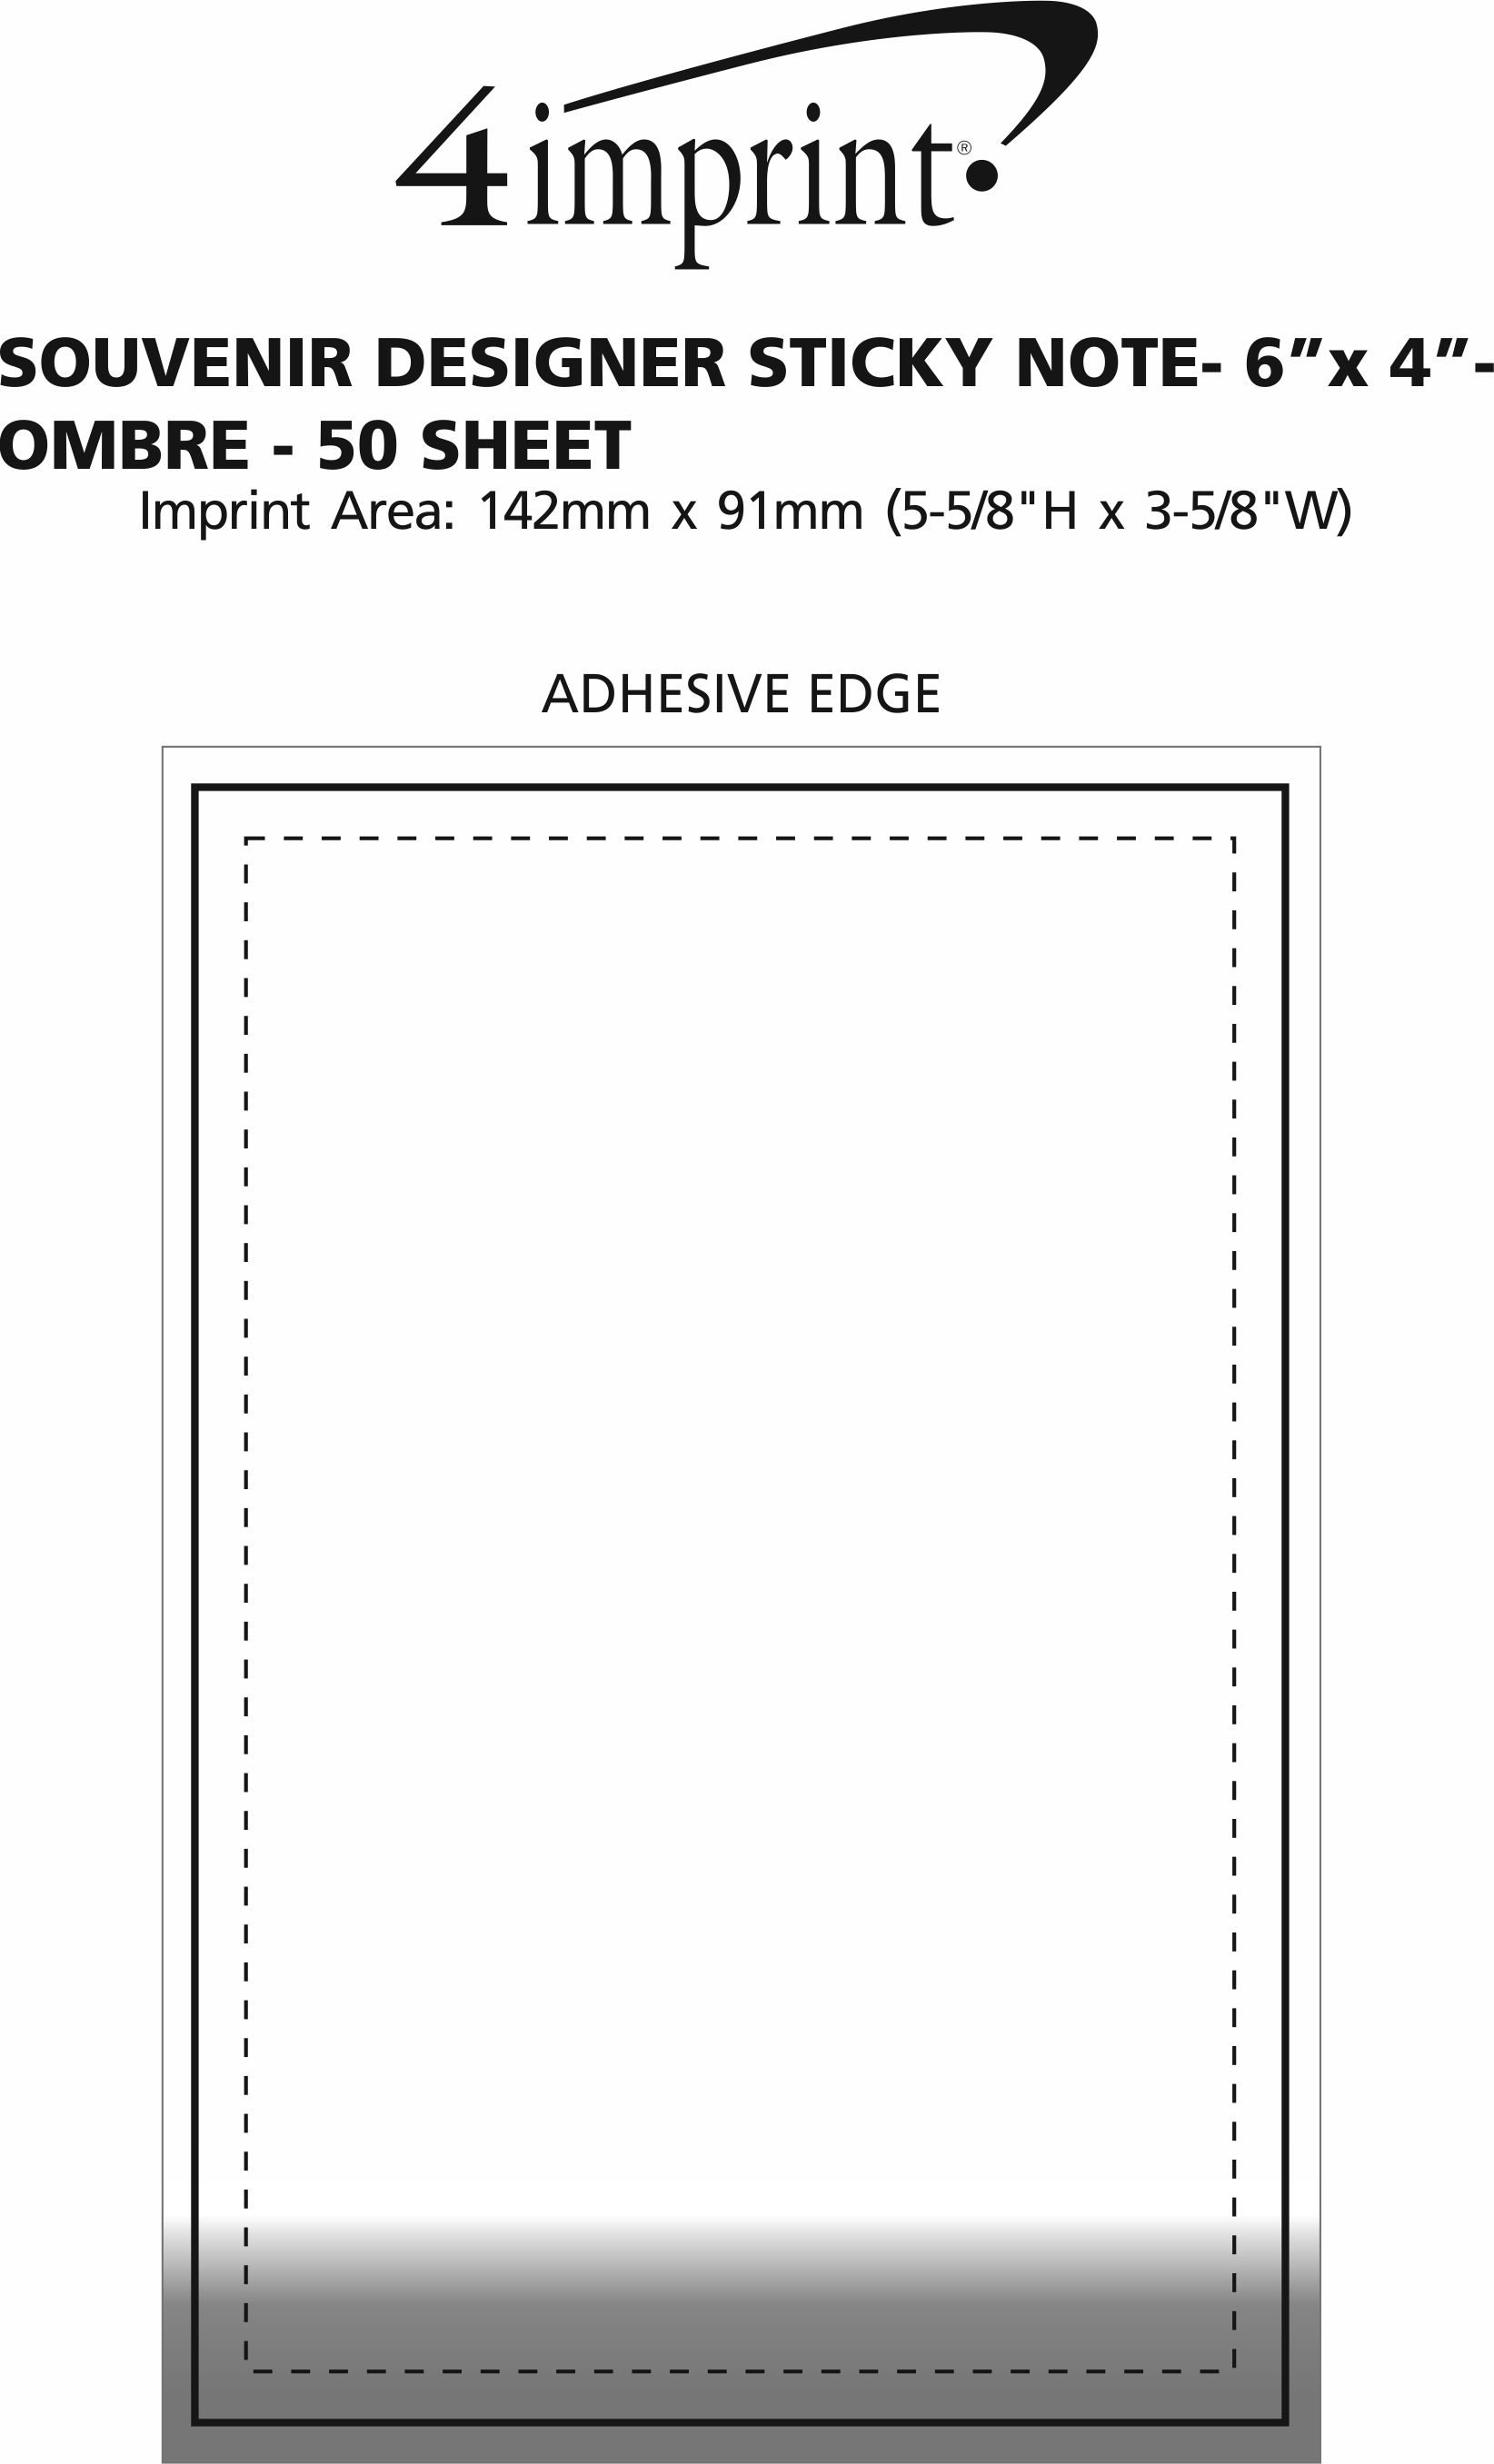 Imprint Area of Souvenir Designer Sticky Note - 6x4 - Ombre - 50 Sheet